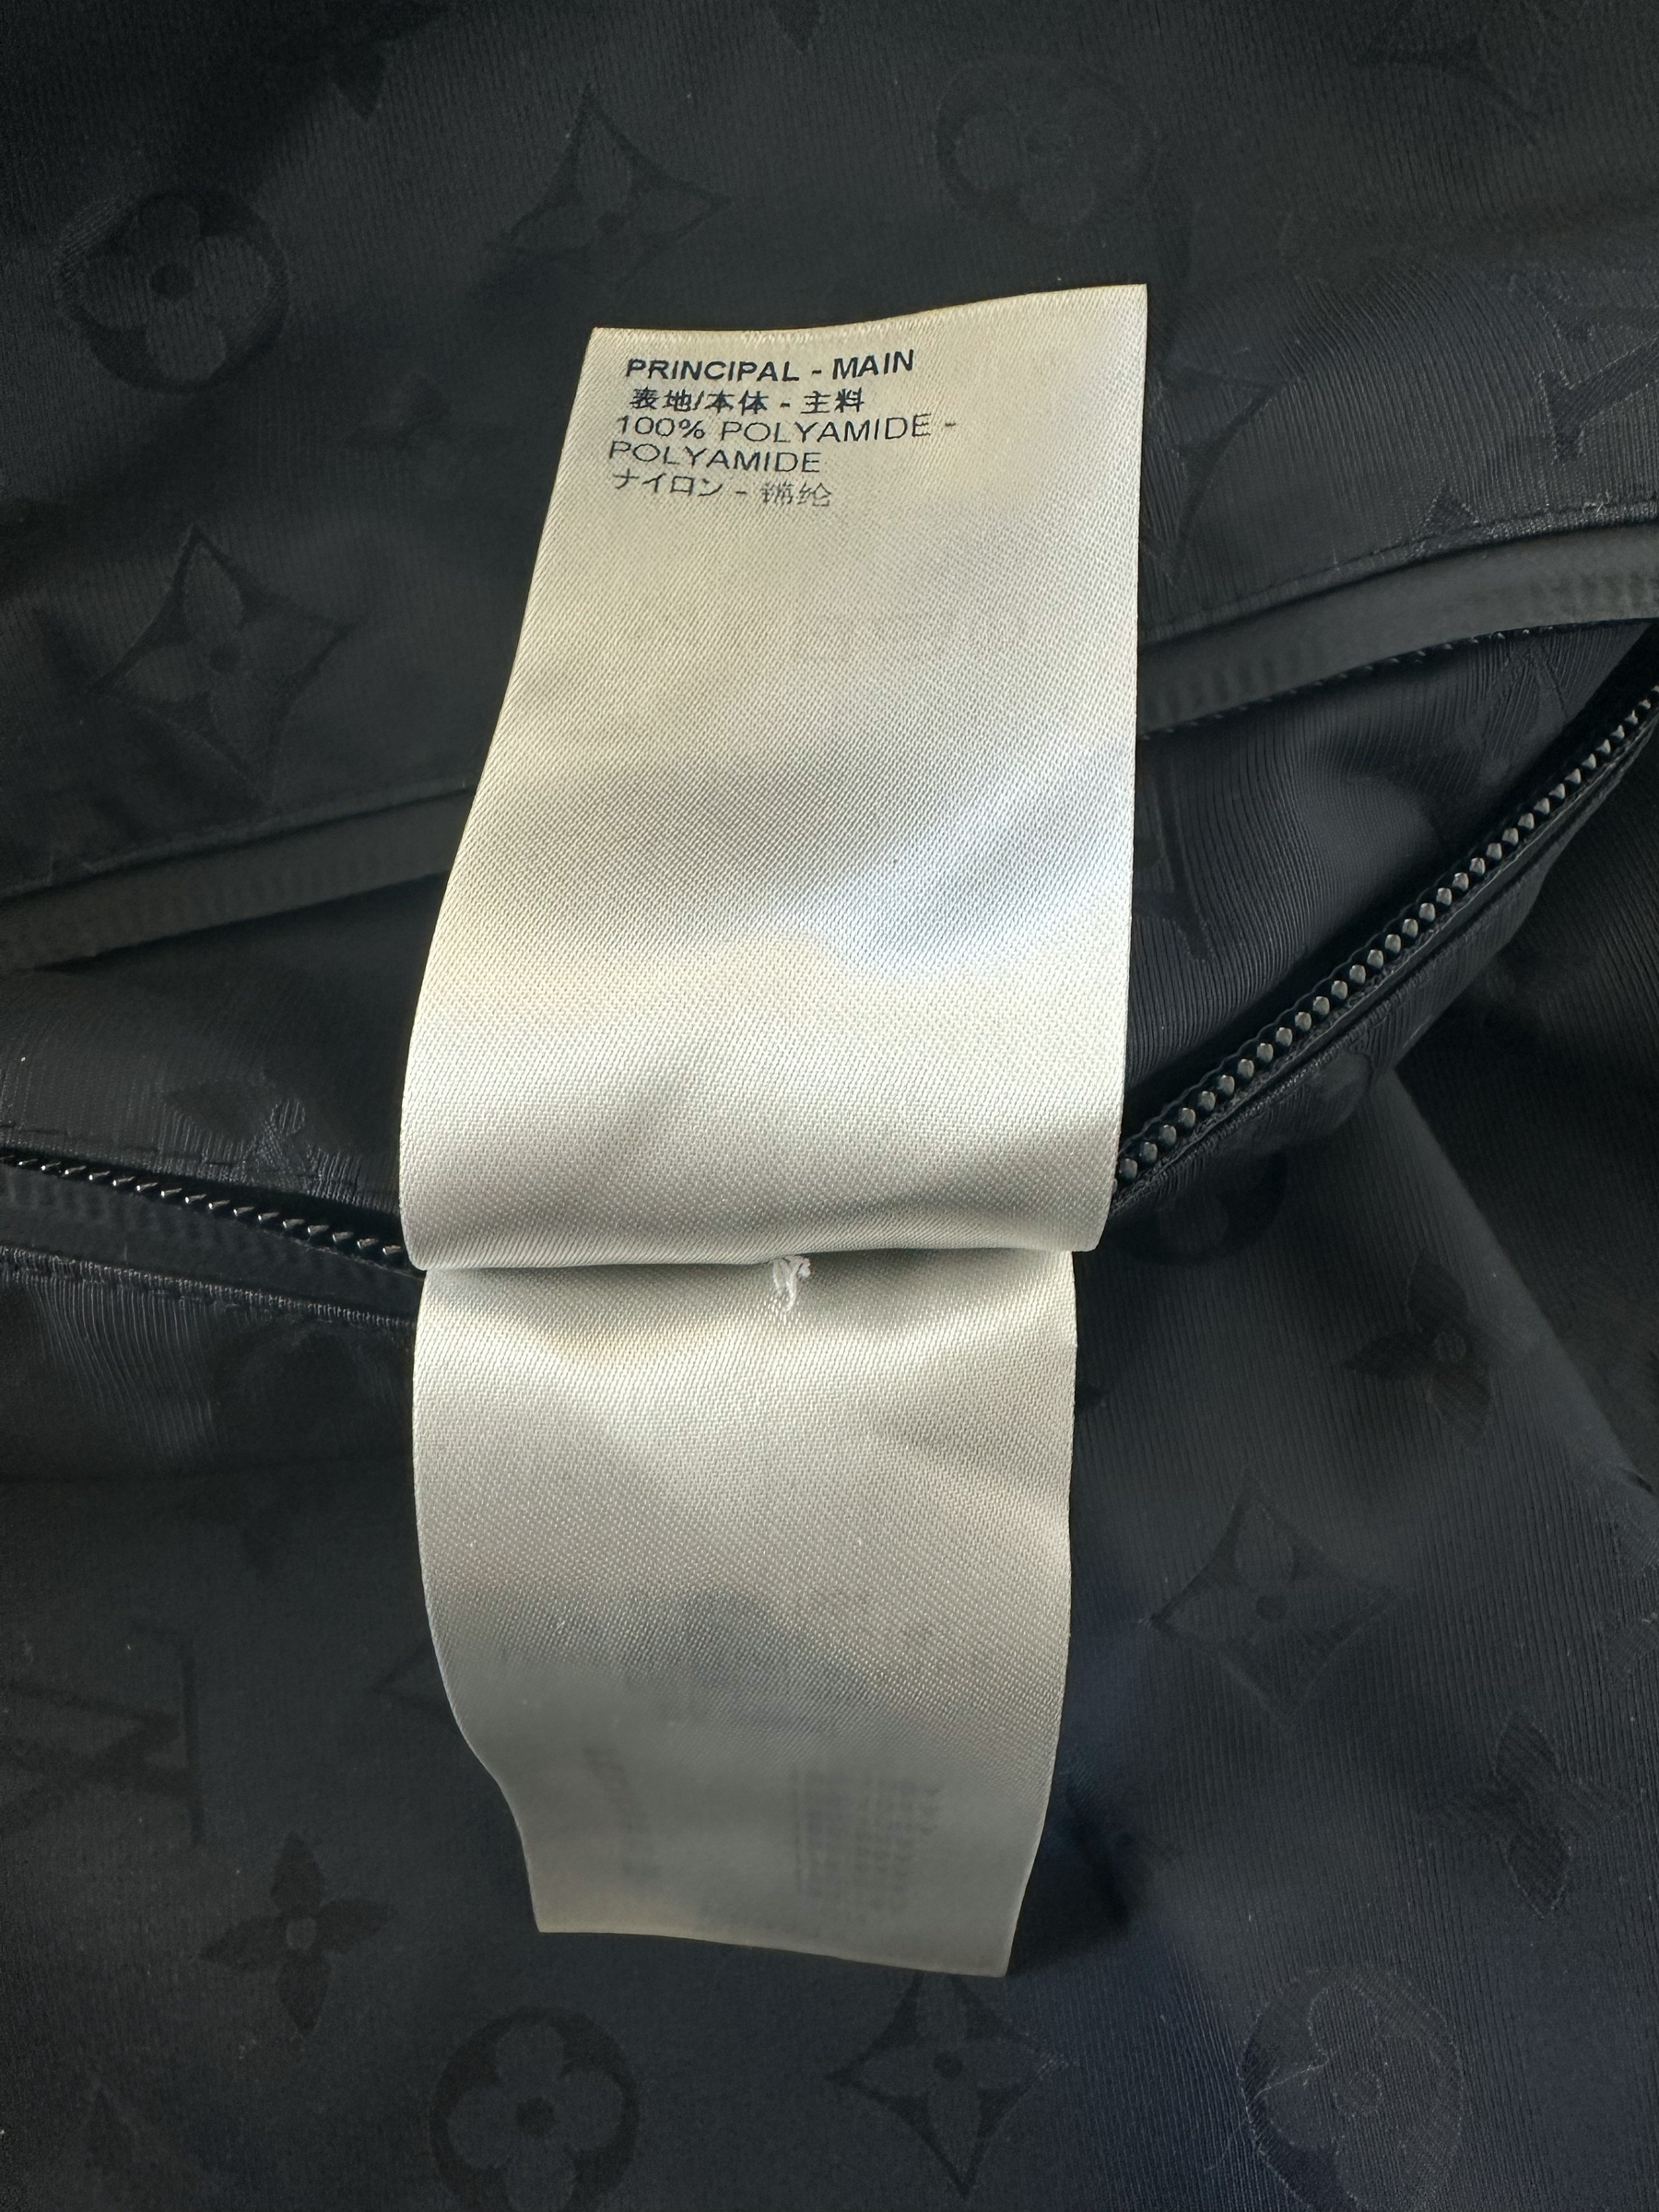 Louis Vuitton 2020 LV Monogram Windbreaker - Black Outerwear, Clothing -  LOU805569